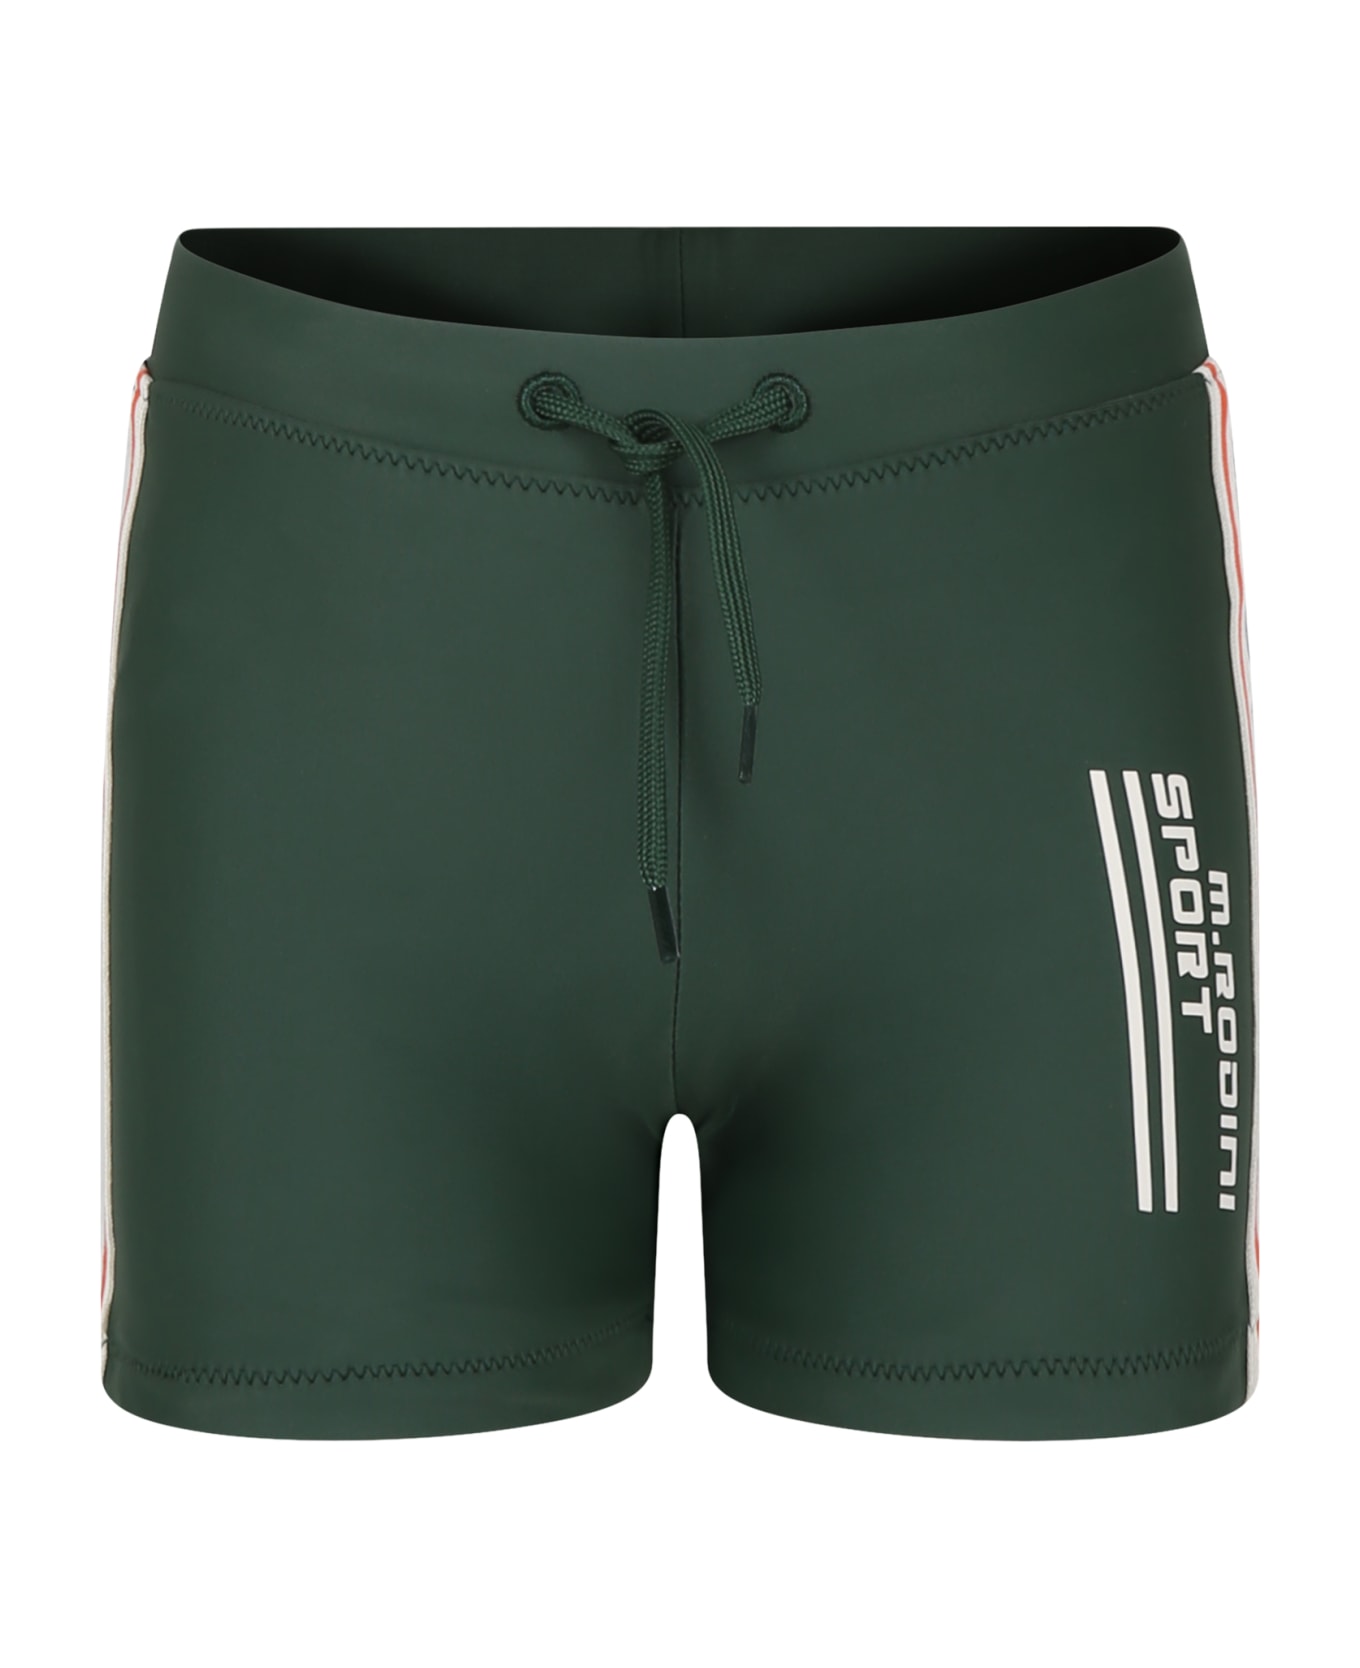 Mini Rodini Green Swim Shorts For Boy With Logo - Green 水着